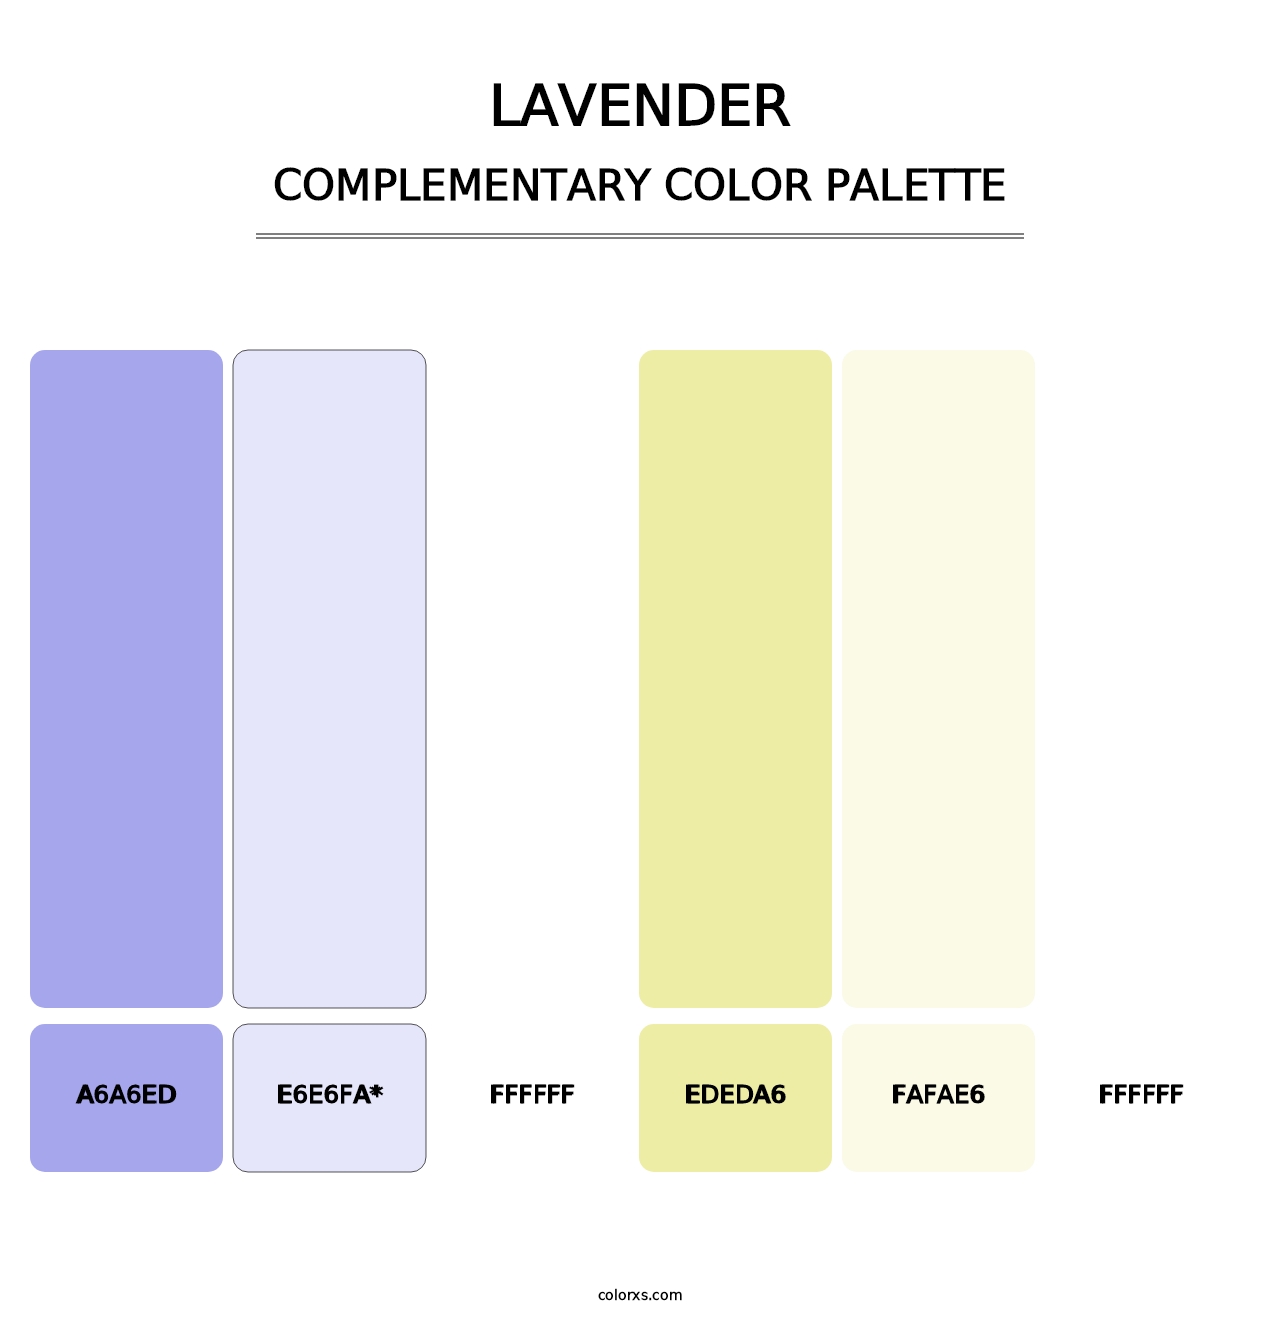 Lavender - Complementary Color Palette